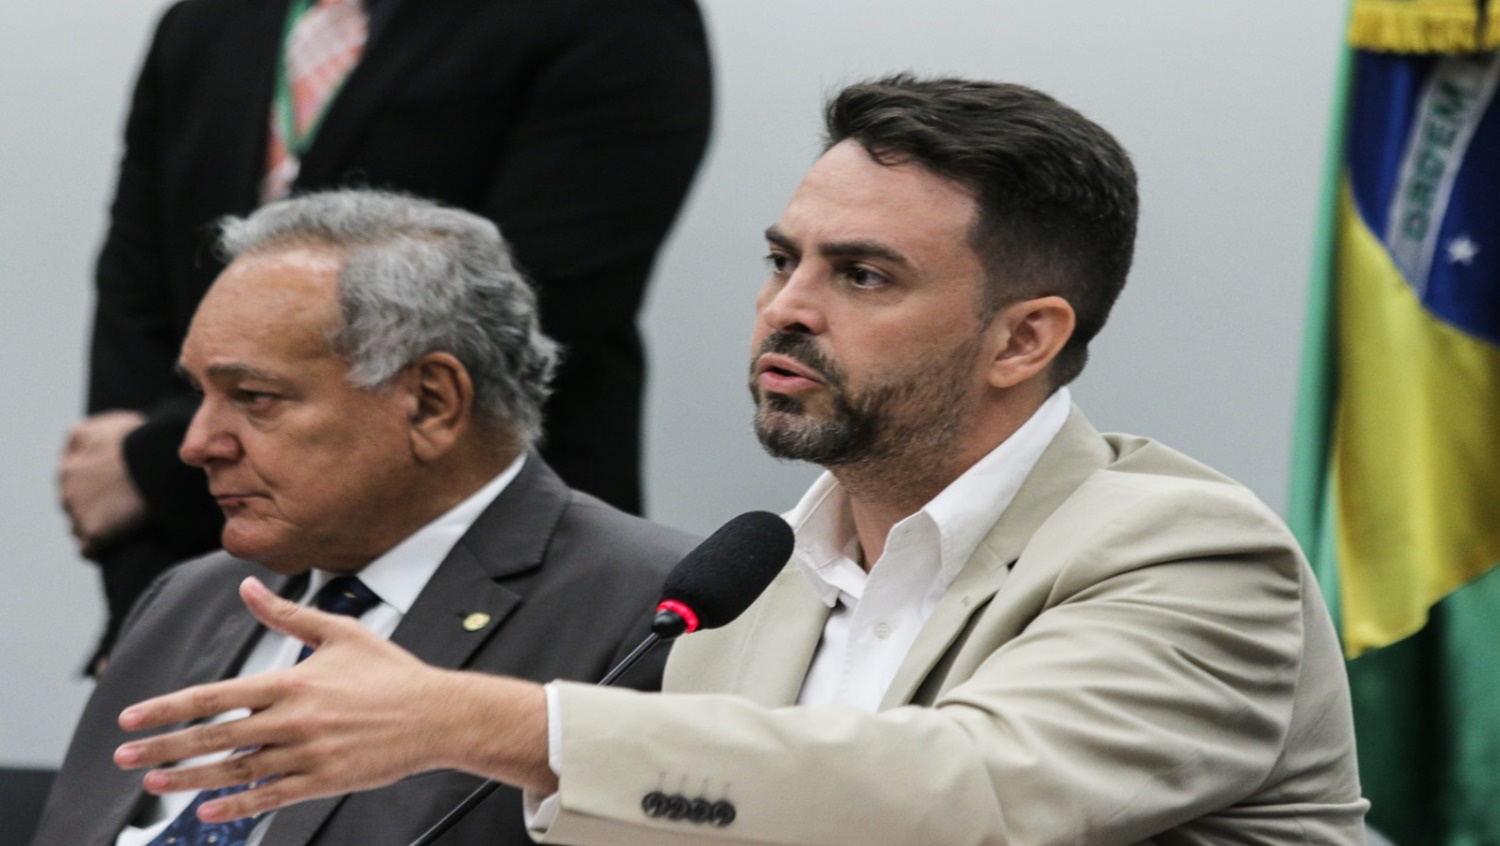 FIES: Léo Moraes quer restabelecer crédito para alunos inadimplentes